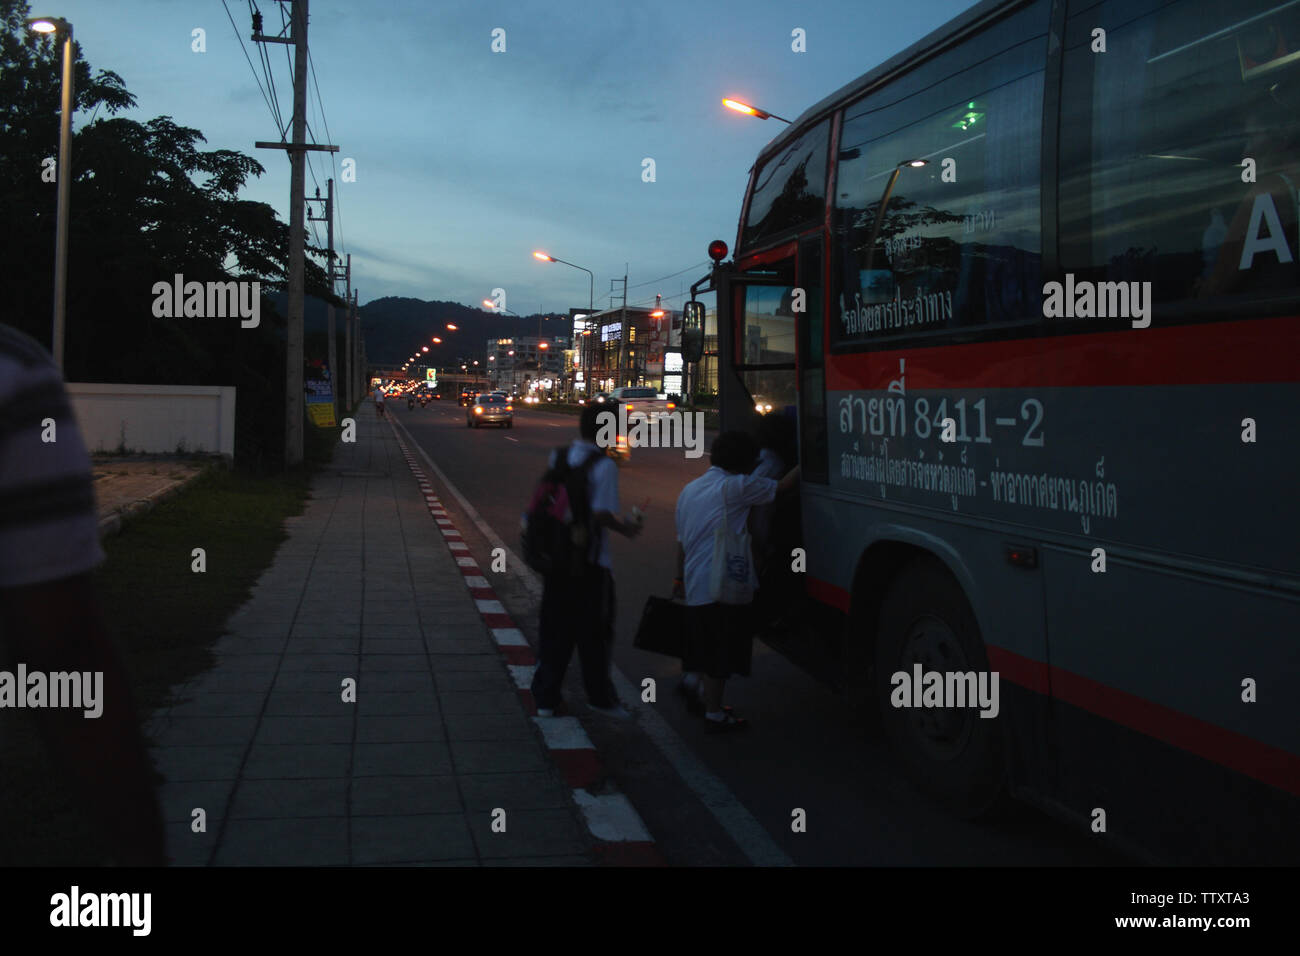 Students boarding a bus, Phuket, Thailand Stock Photo